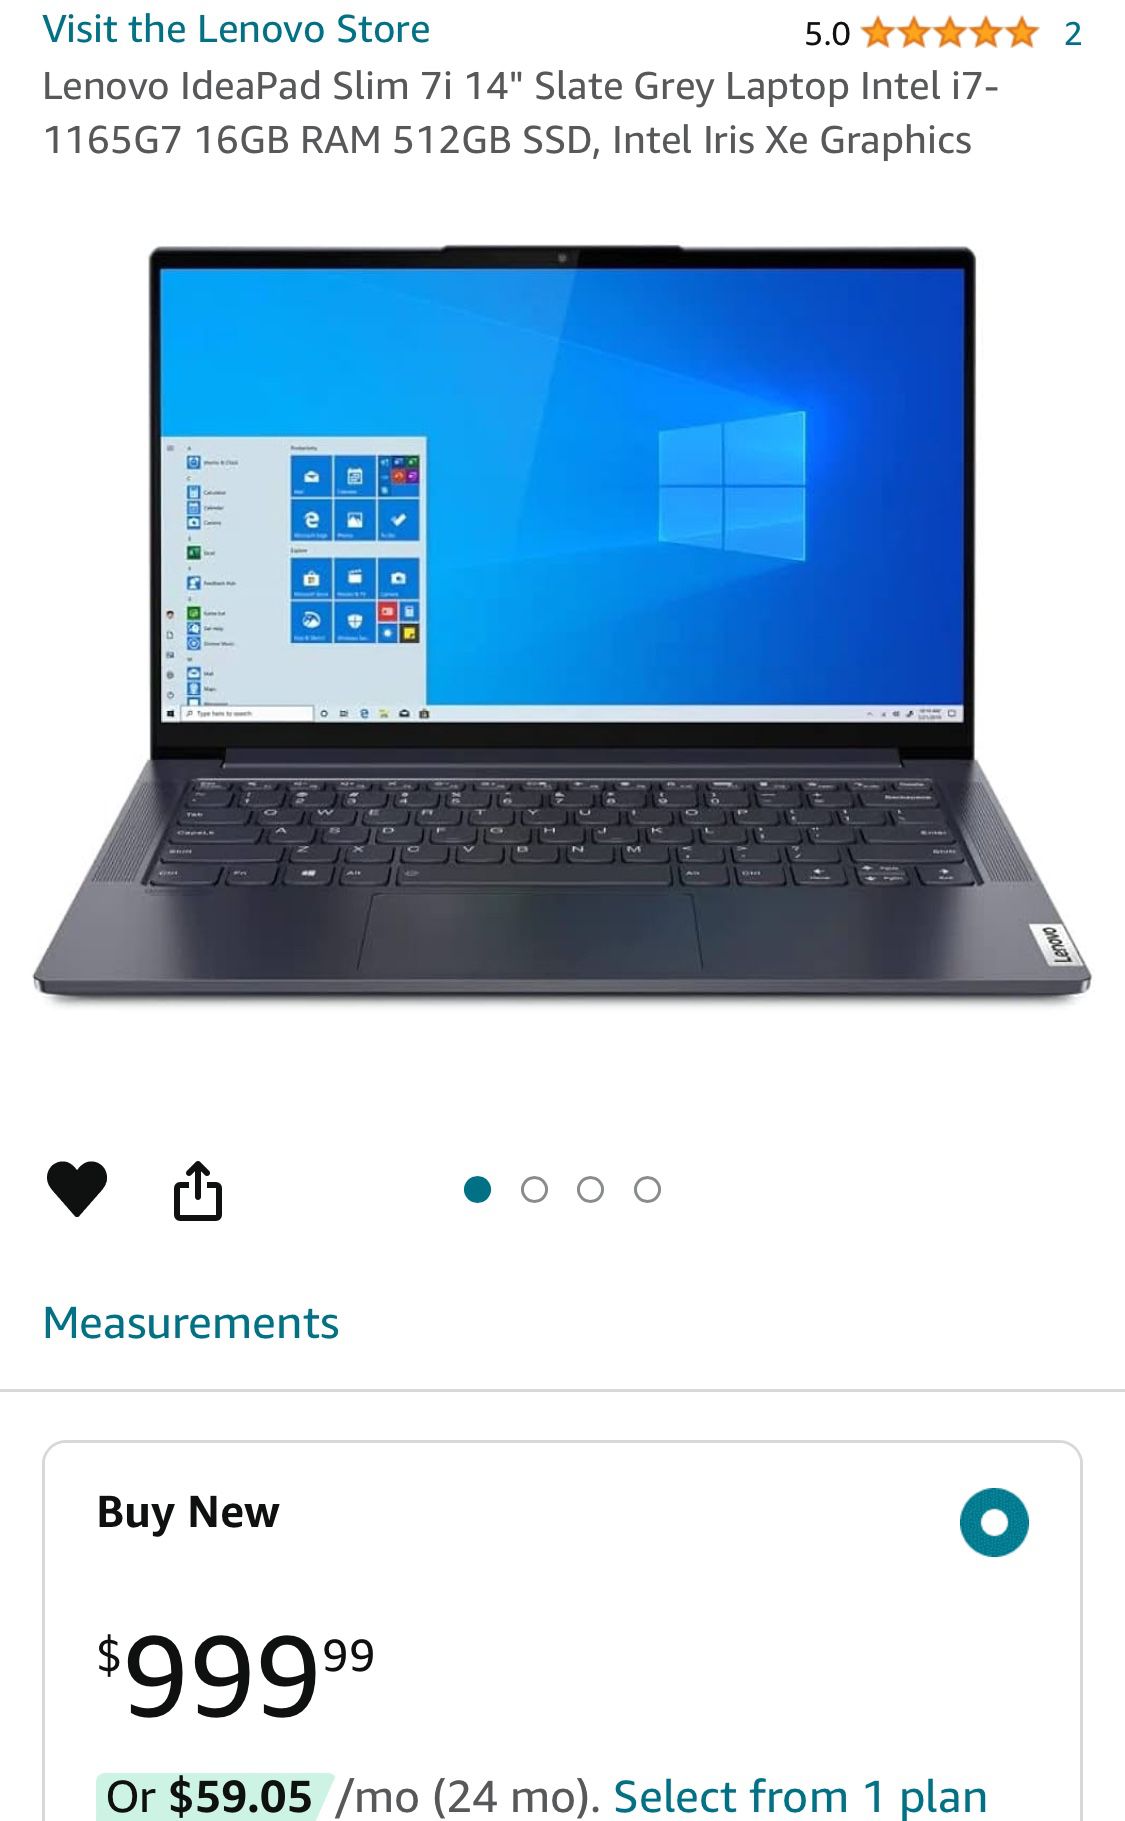 Lenovo IdeaPad Slim 7i 14" Slate Grey Laptop Intel i7-1165G7 16GB RAM 512GB SSD, Intel Iris Xe Graphics $999